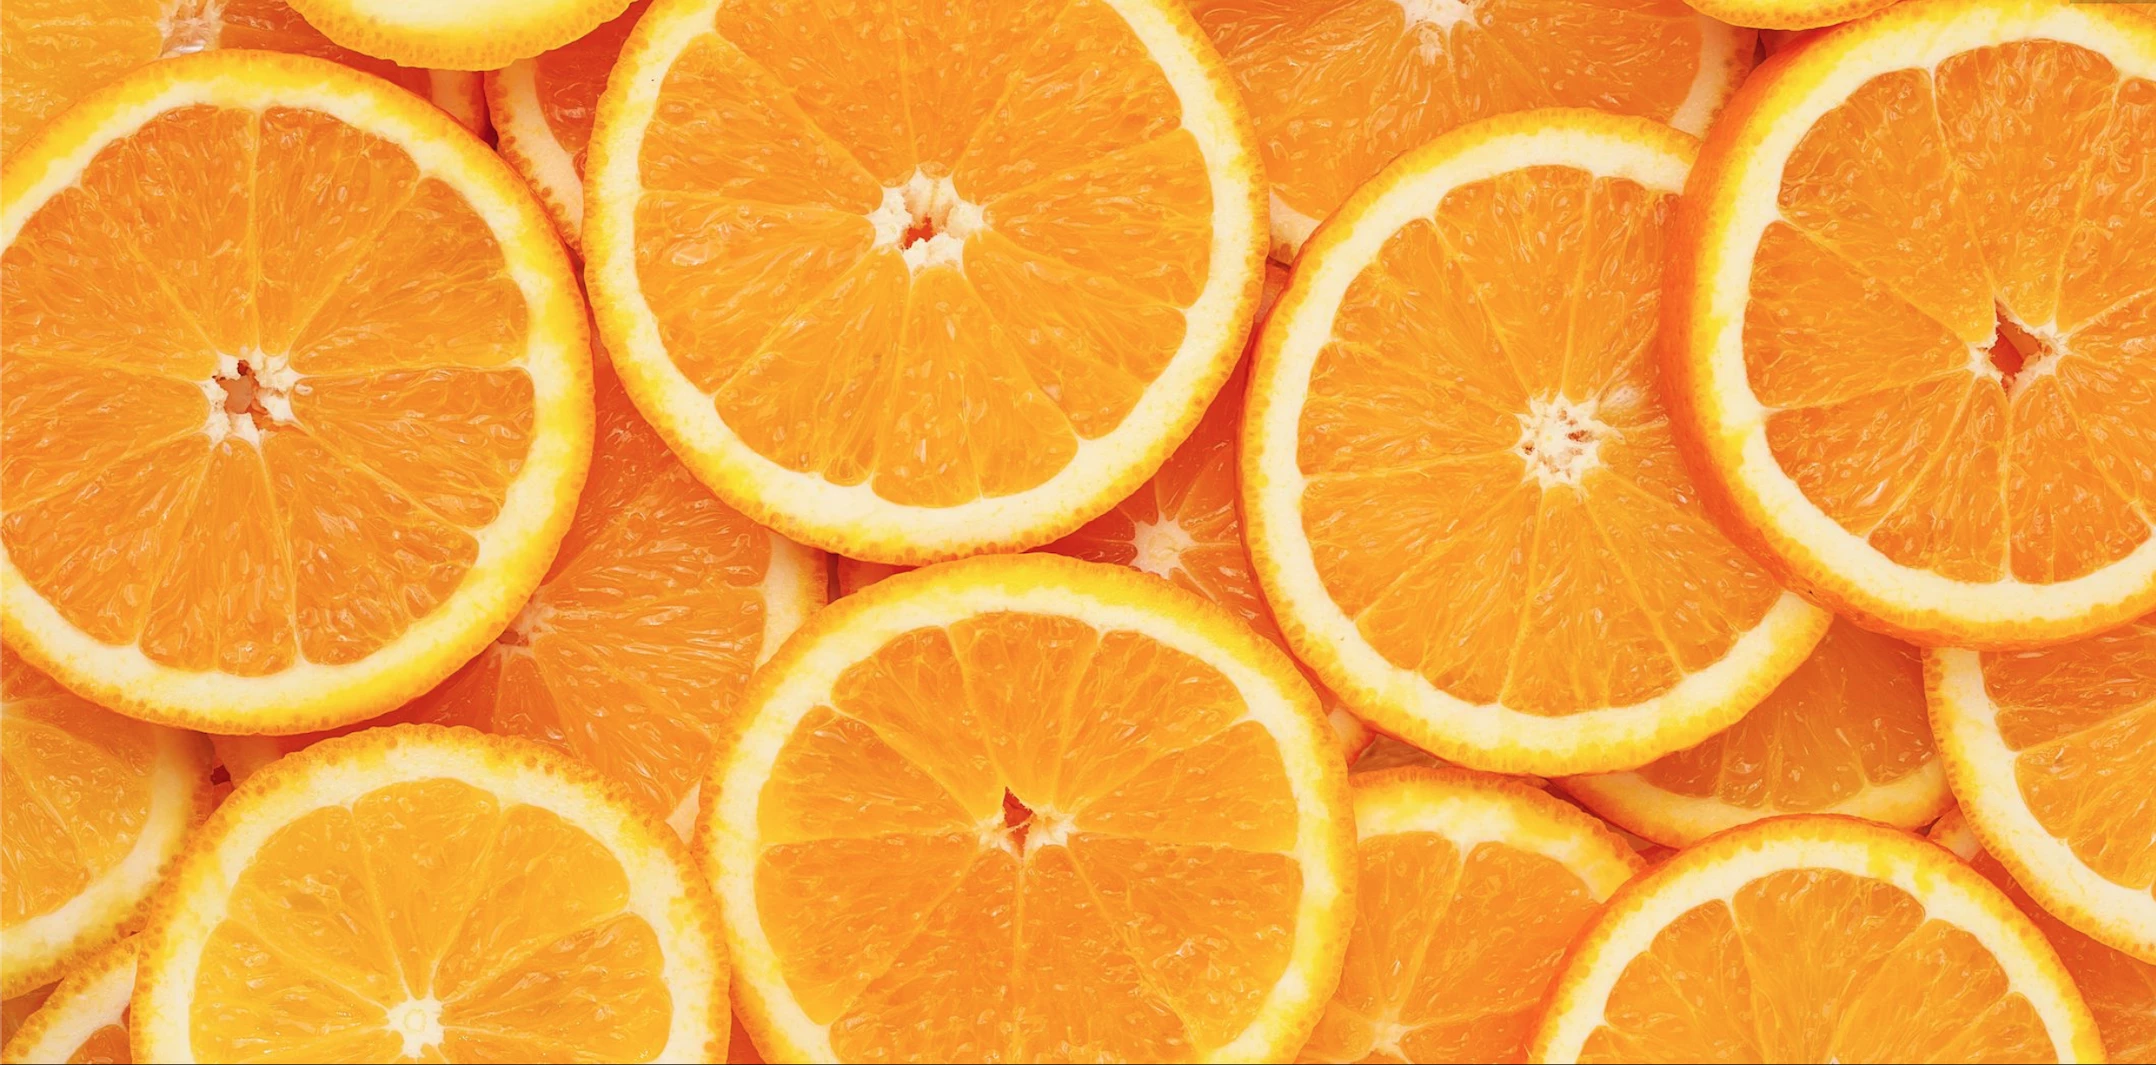 r11-oranges.png